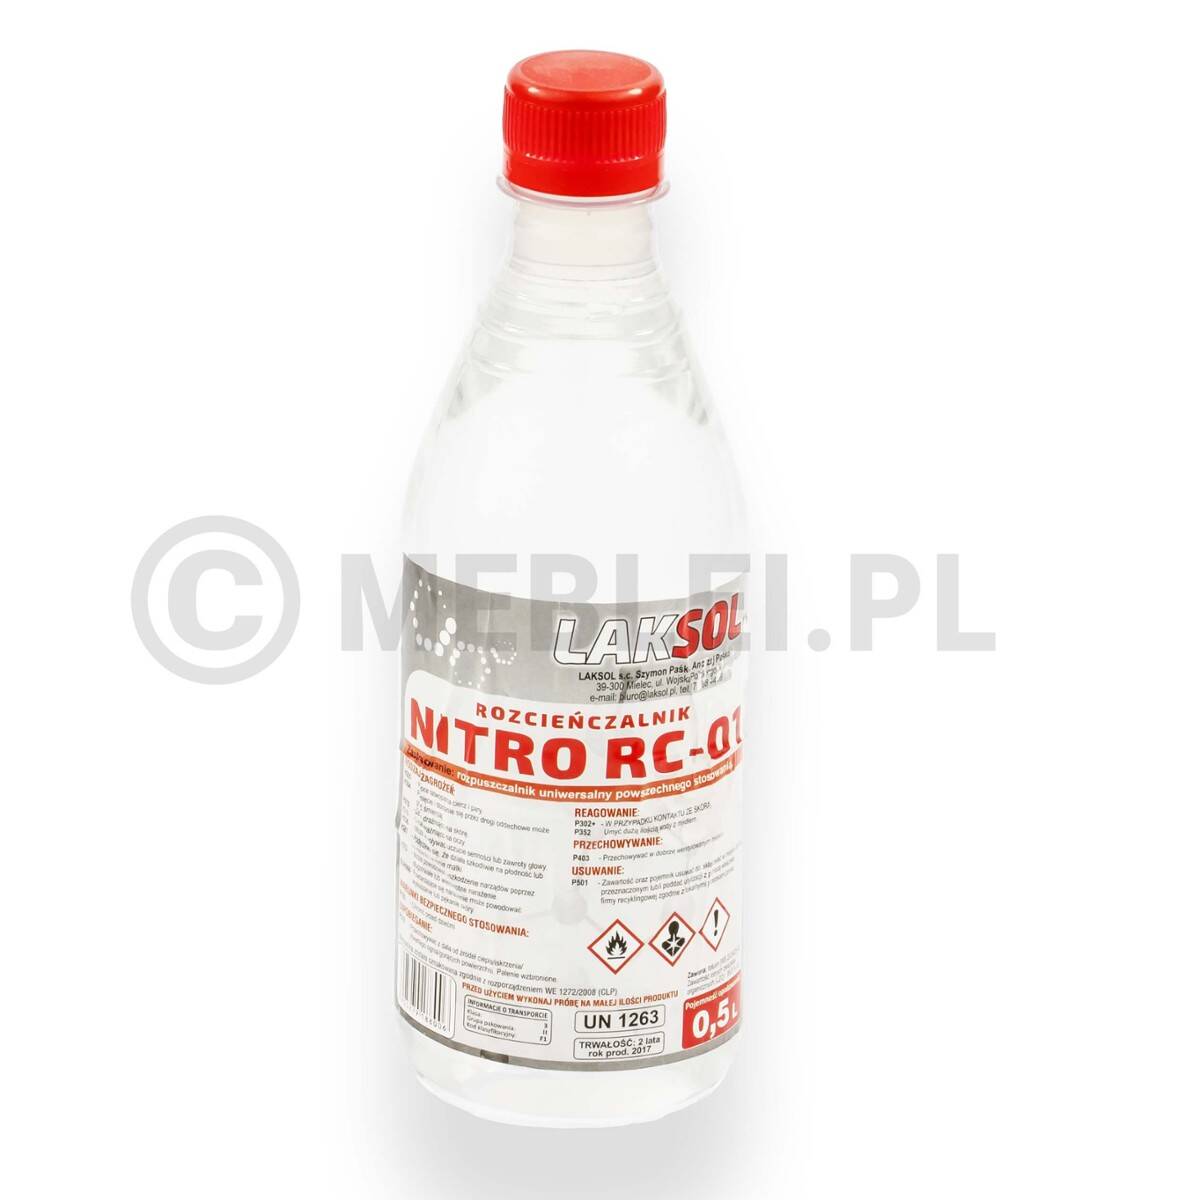 Rozcienczalnik nitro RC-01 0,5L